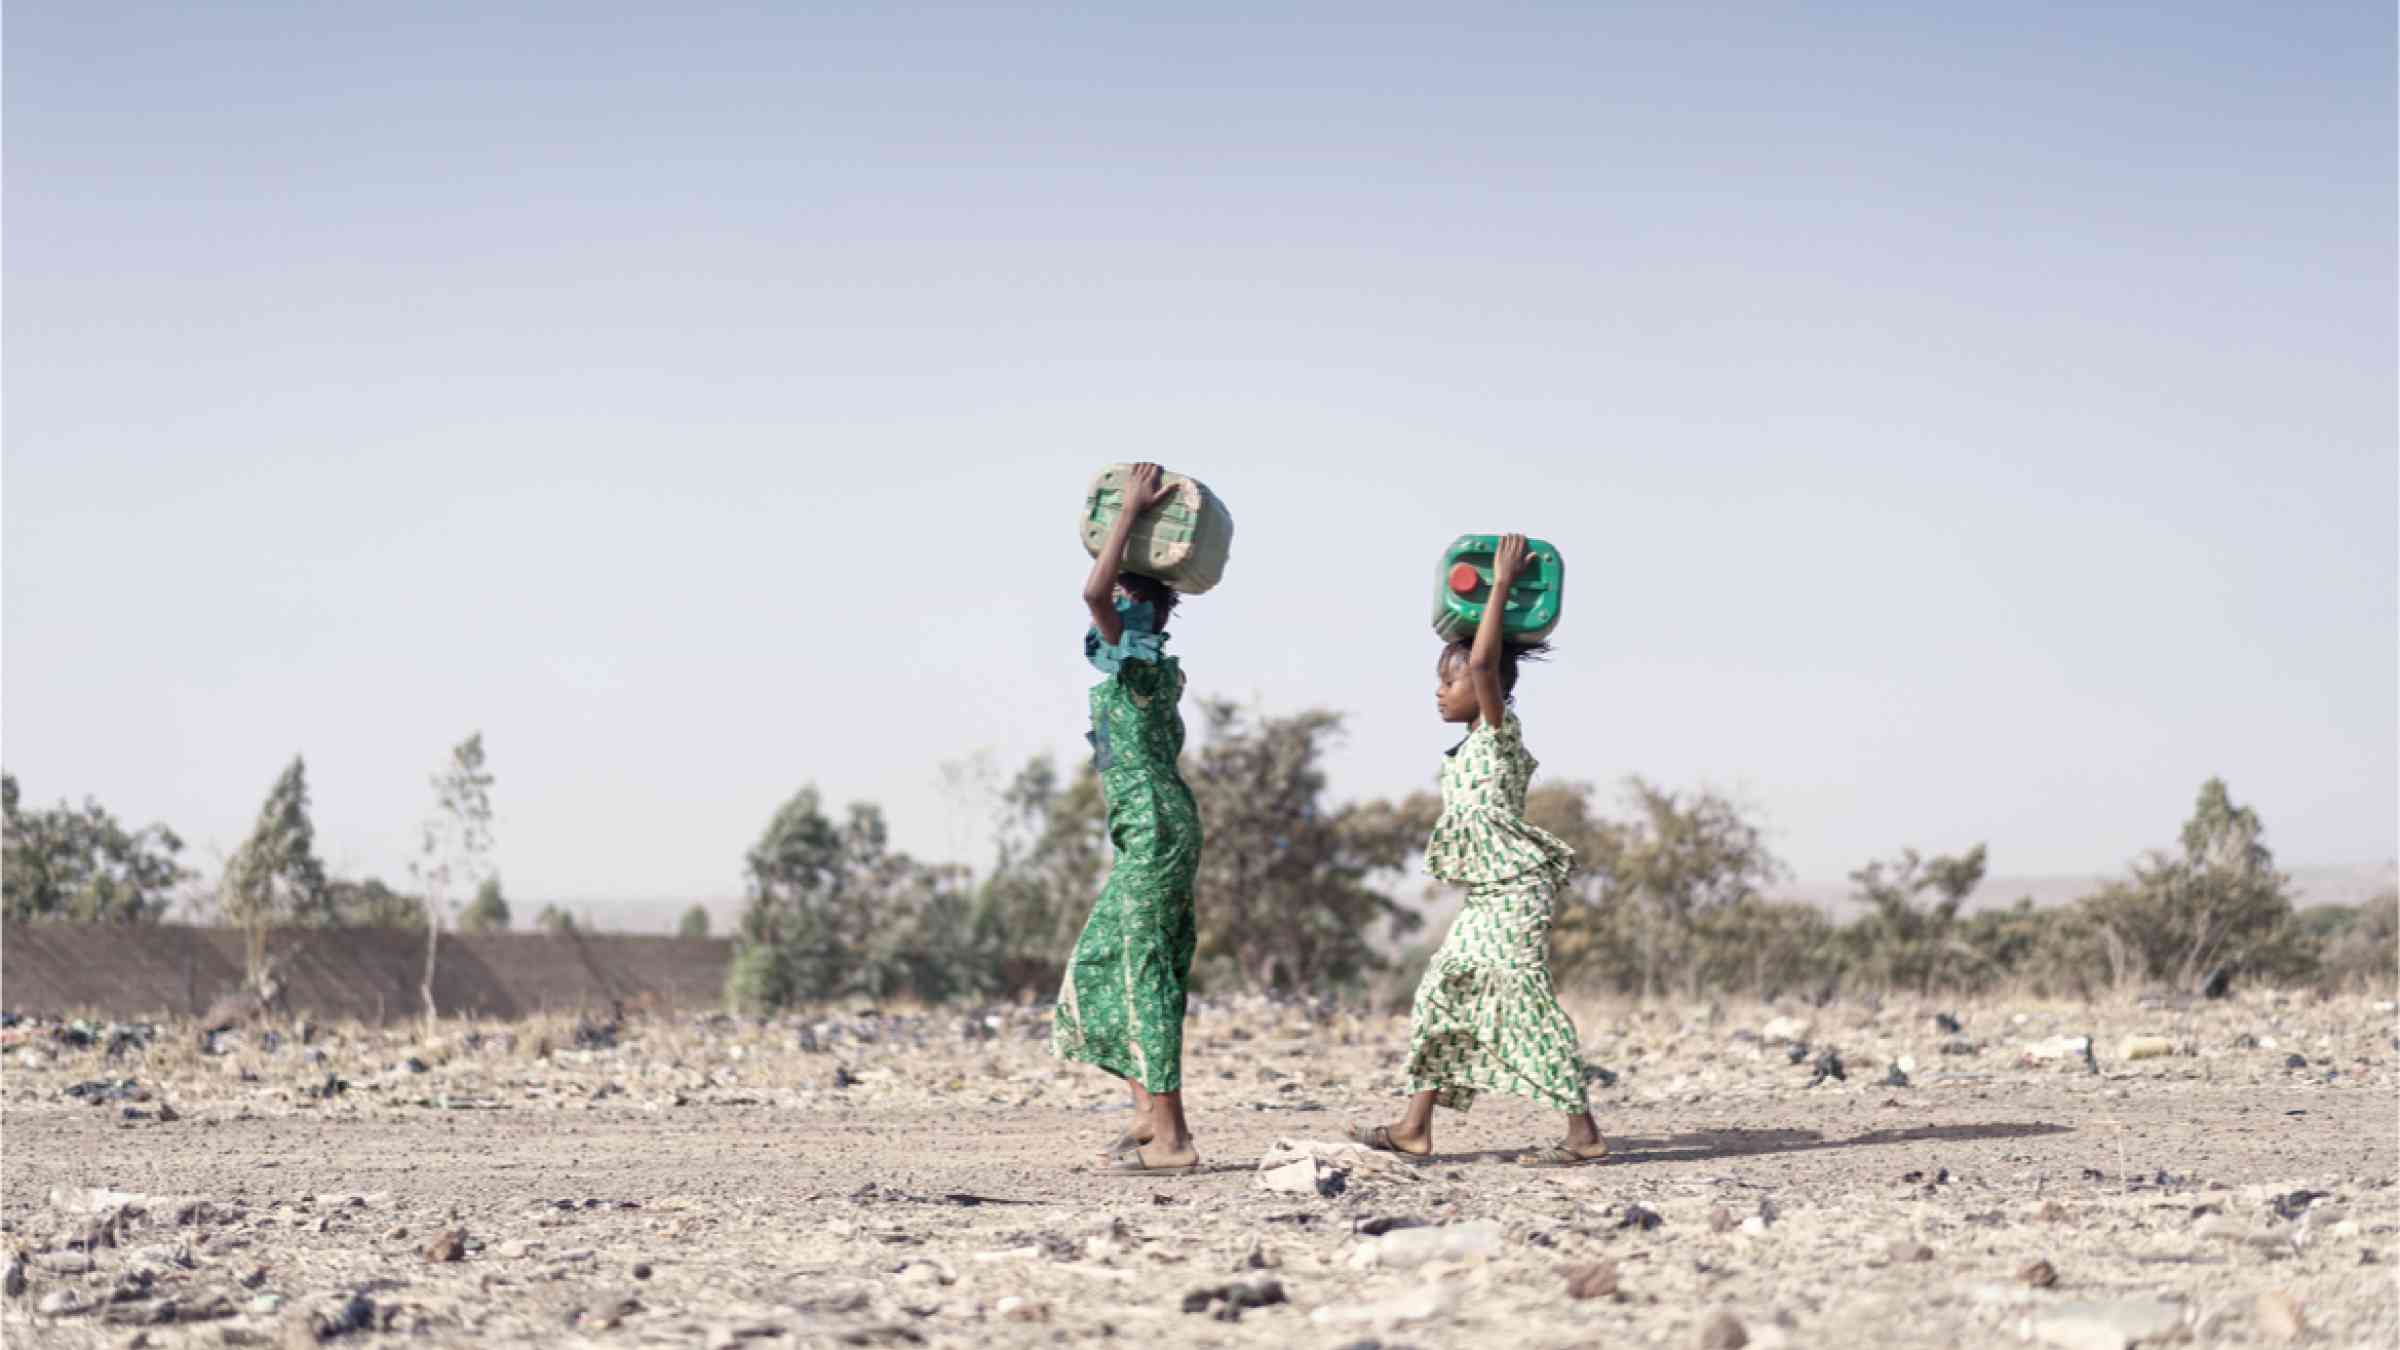 African ethnicity carrying water through a desert landscape